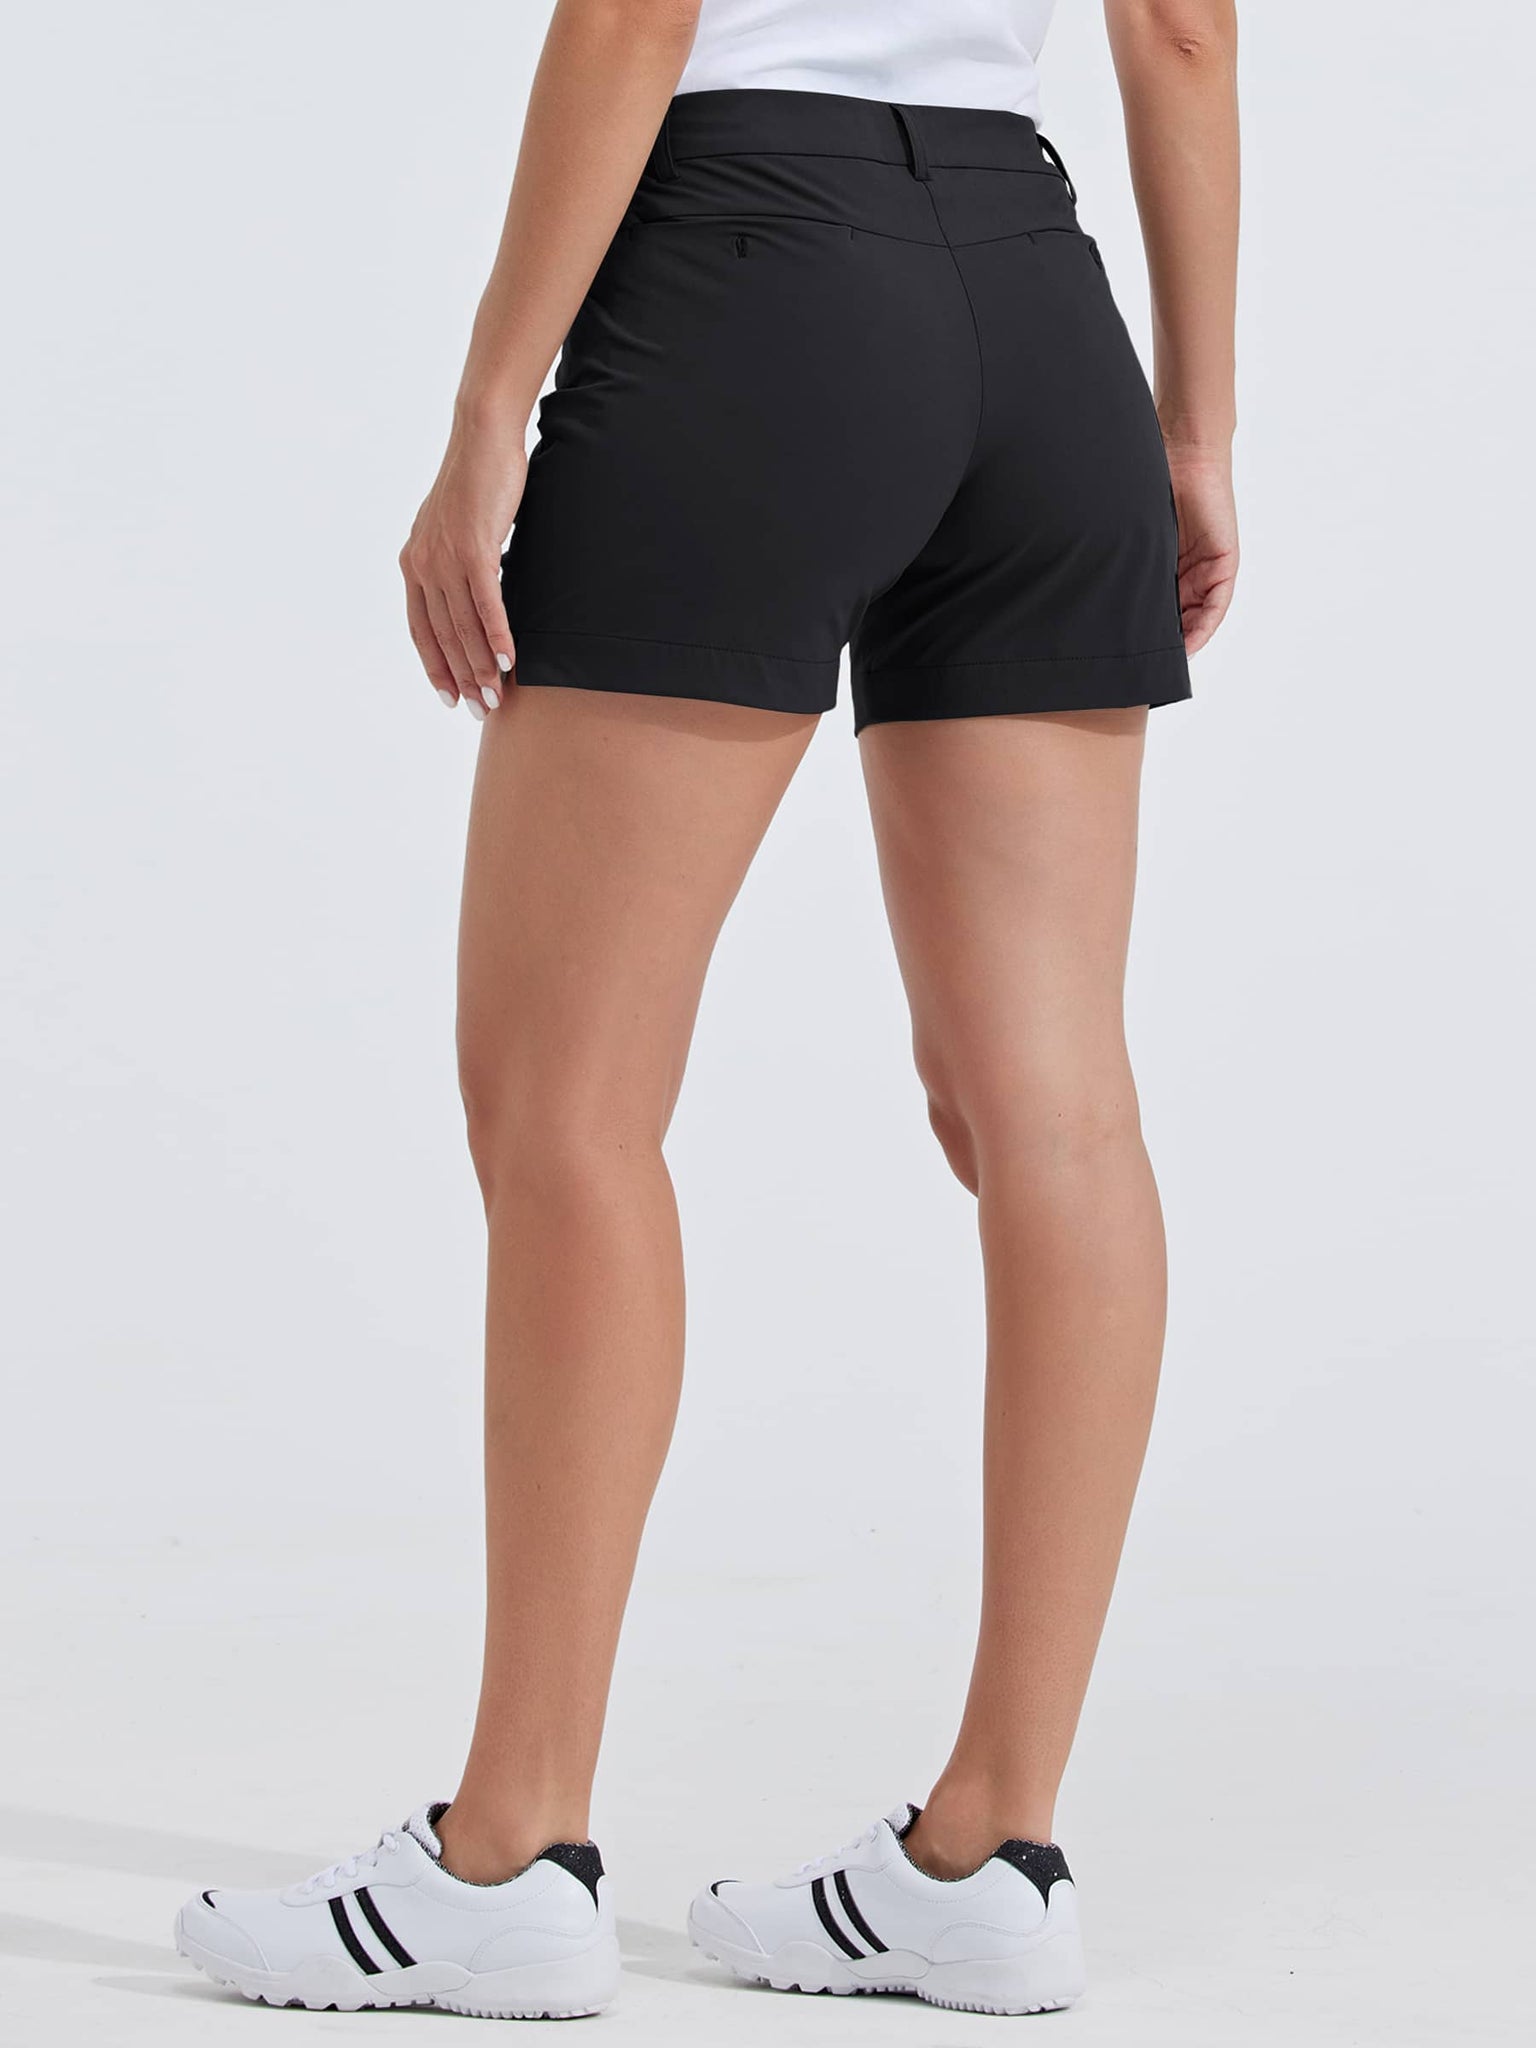 Willit Women's Golf Stretch Shorts 4.5 Inch